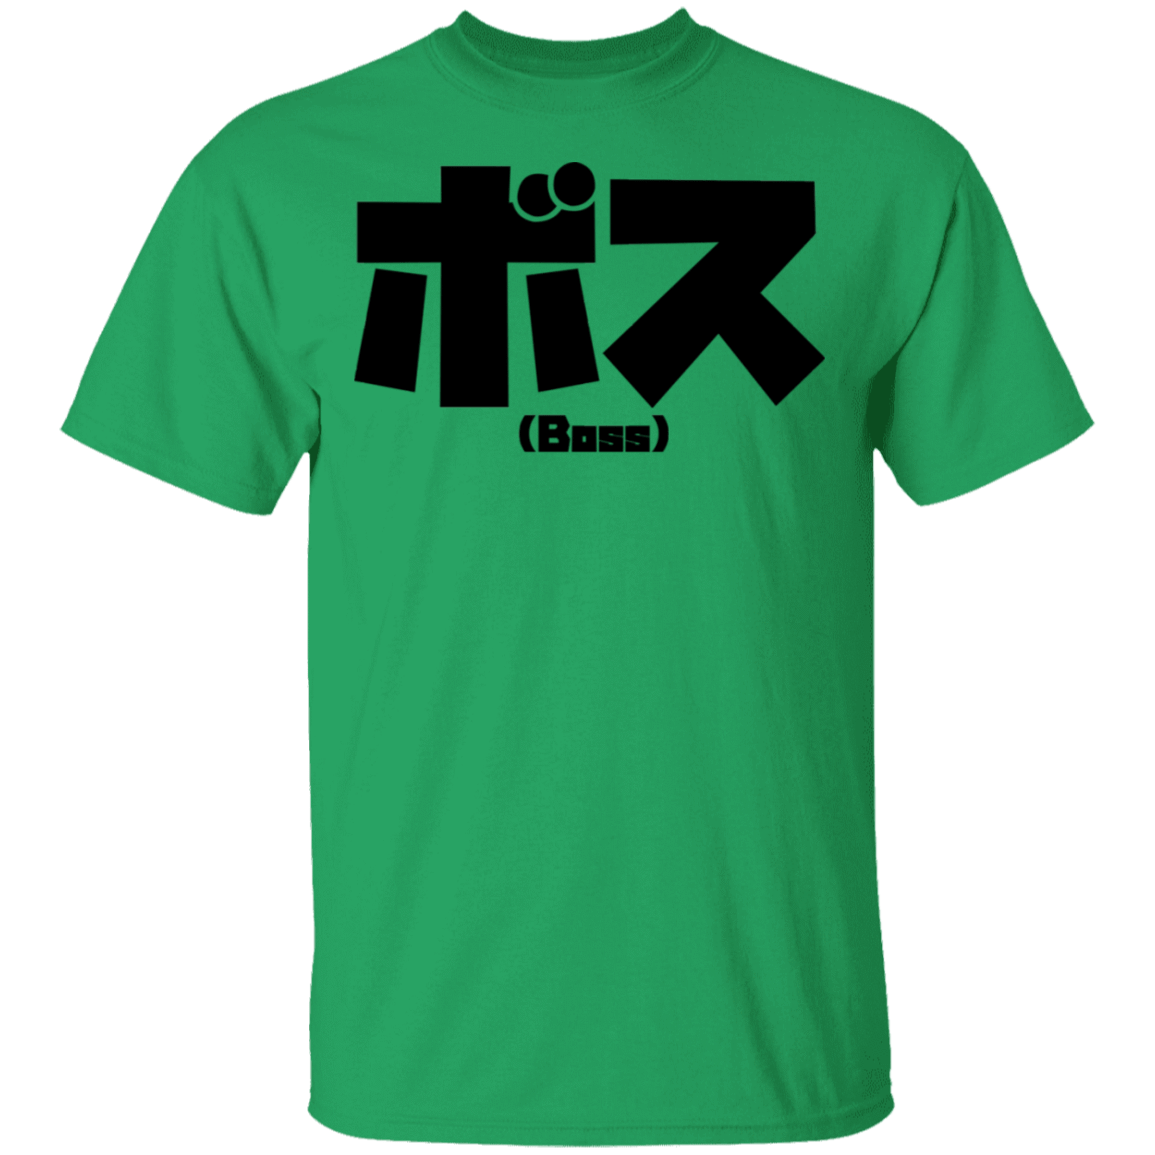 T-Shirts Irish Green / S Boss T-Shirt